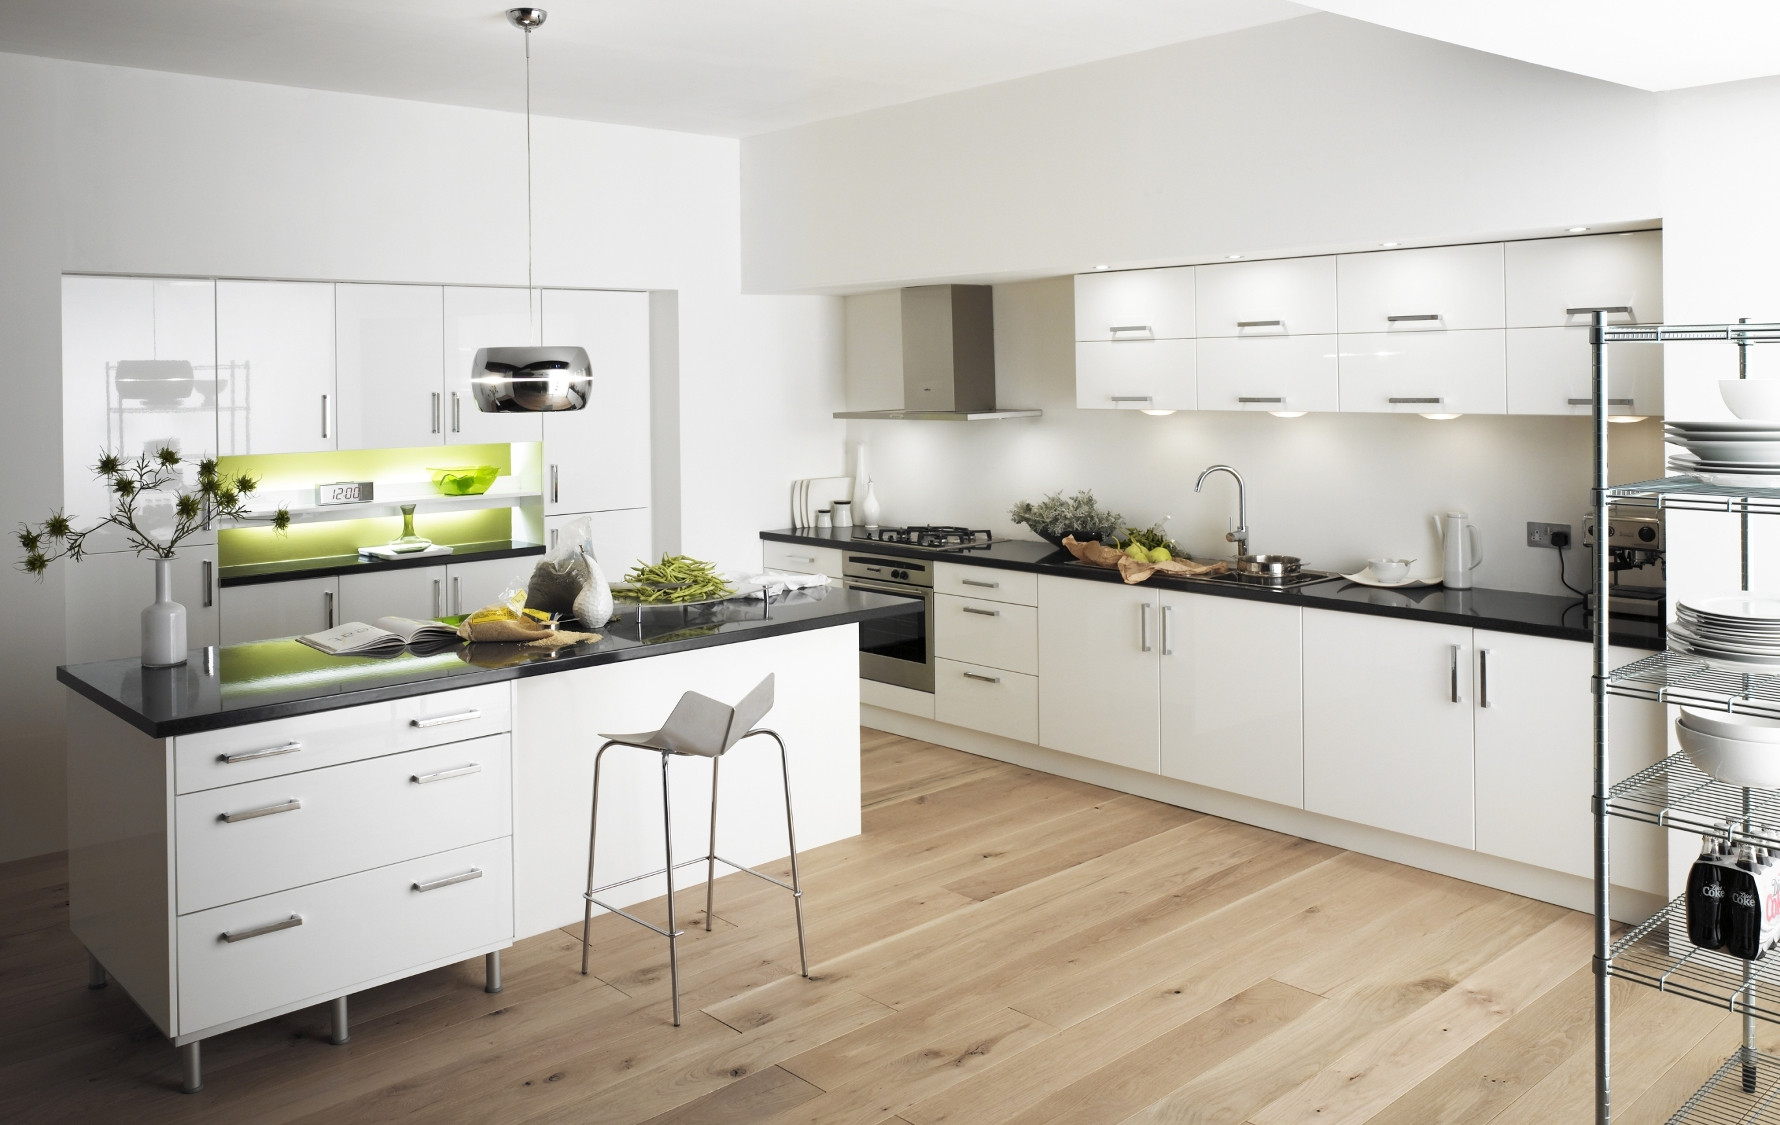 Best ideas about Modern Kitchen Decor
. Save or Pin 41 Small Kitchen Design Ideas InspirationSeek Now.